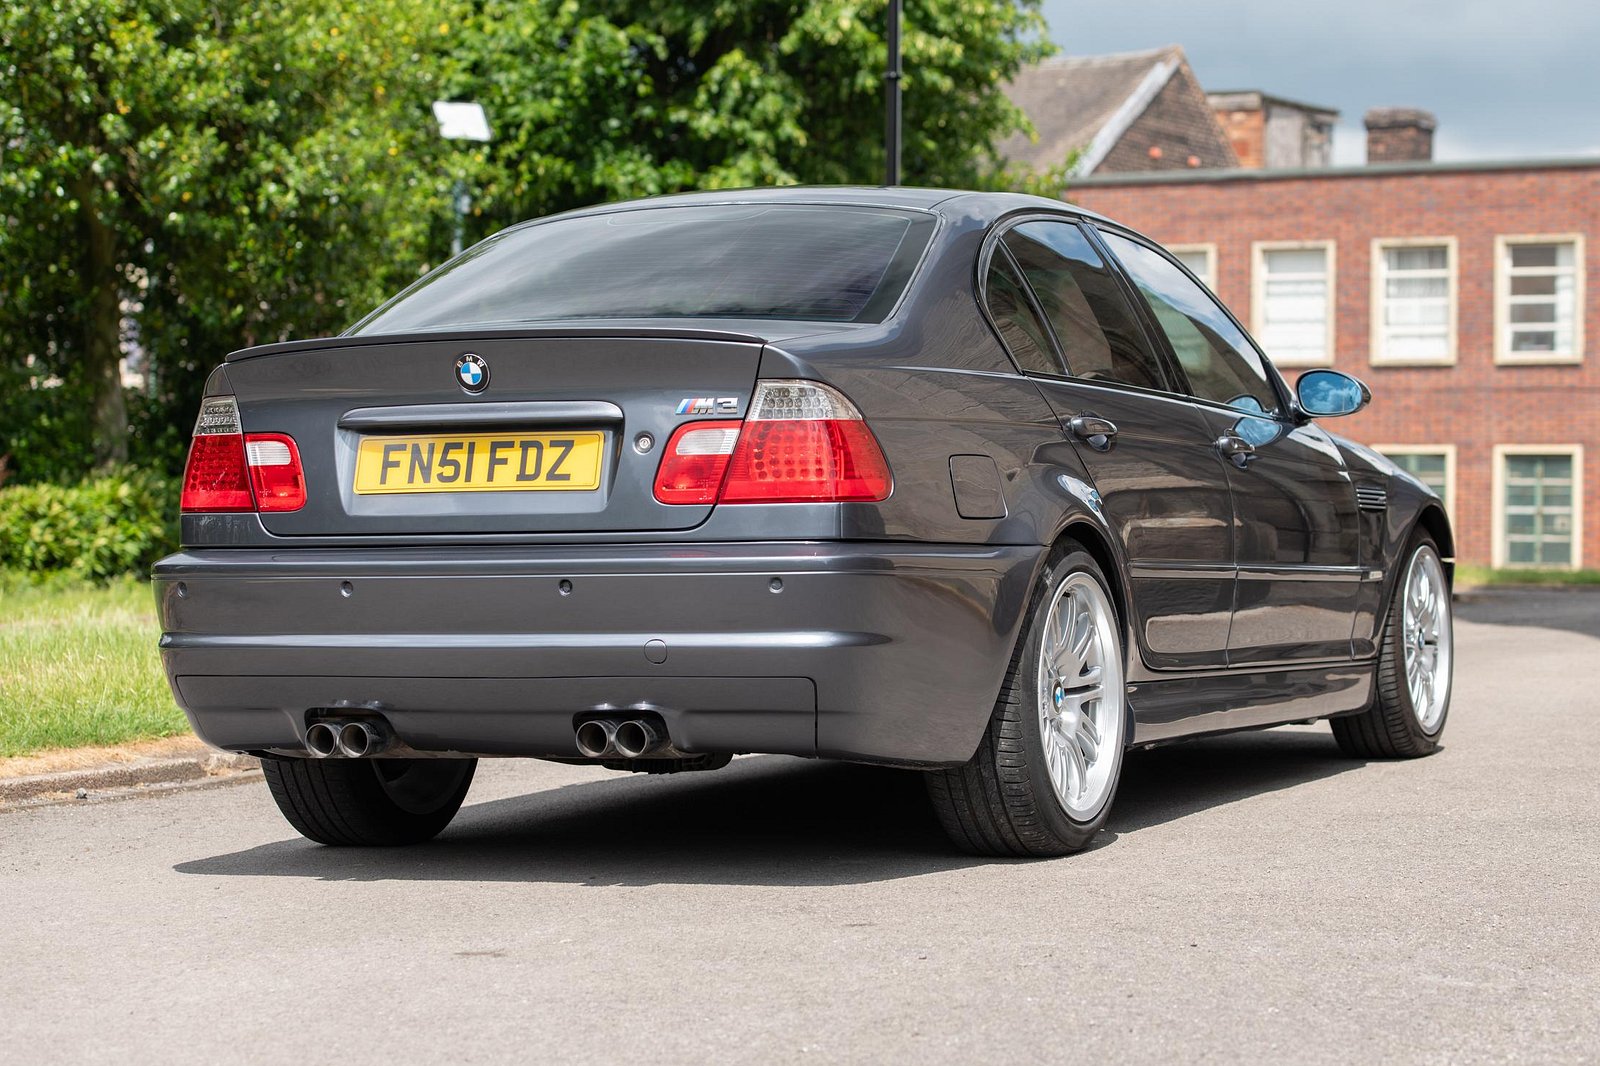 BMW E46 M3 - BMW_